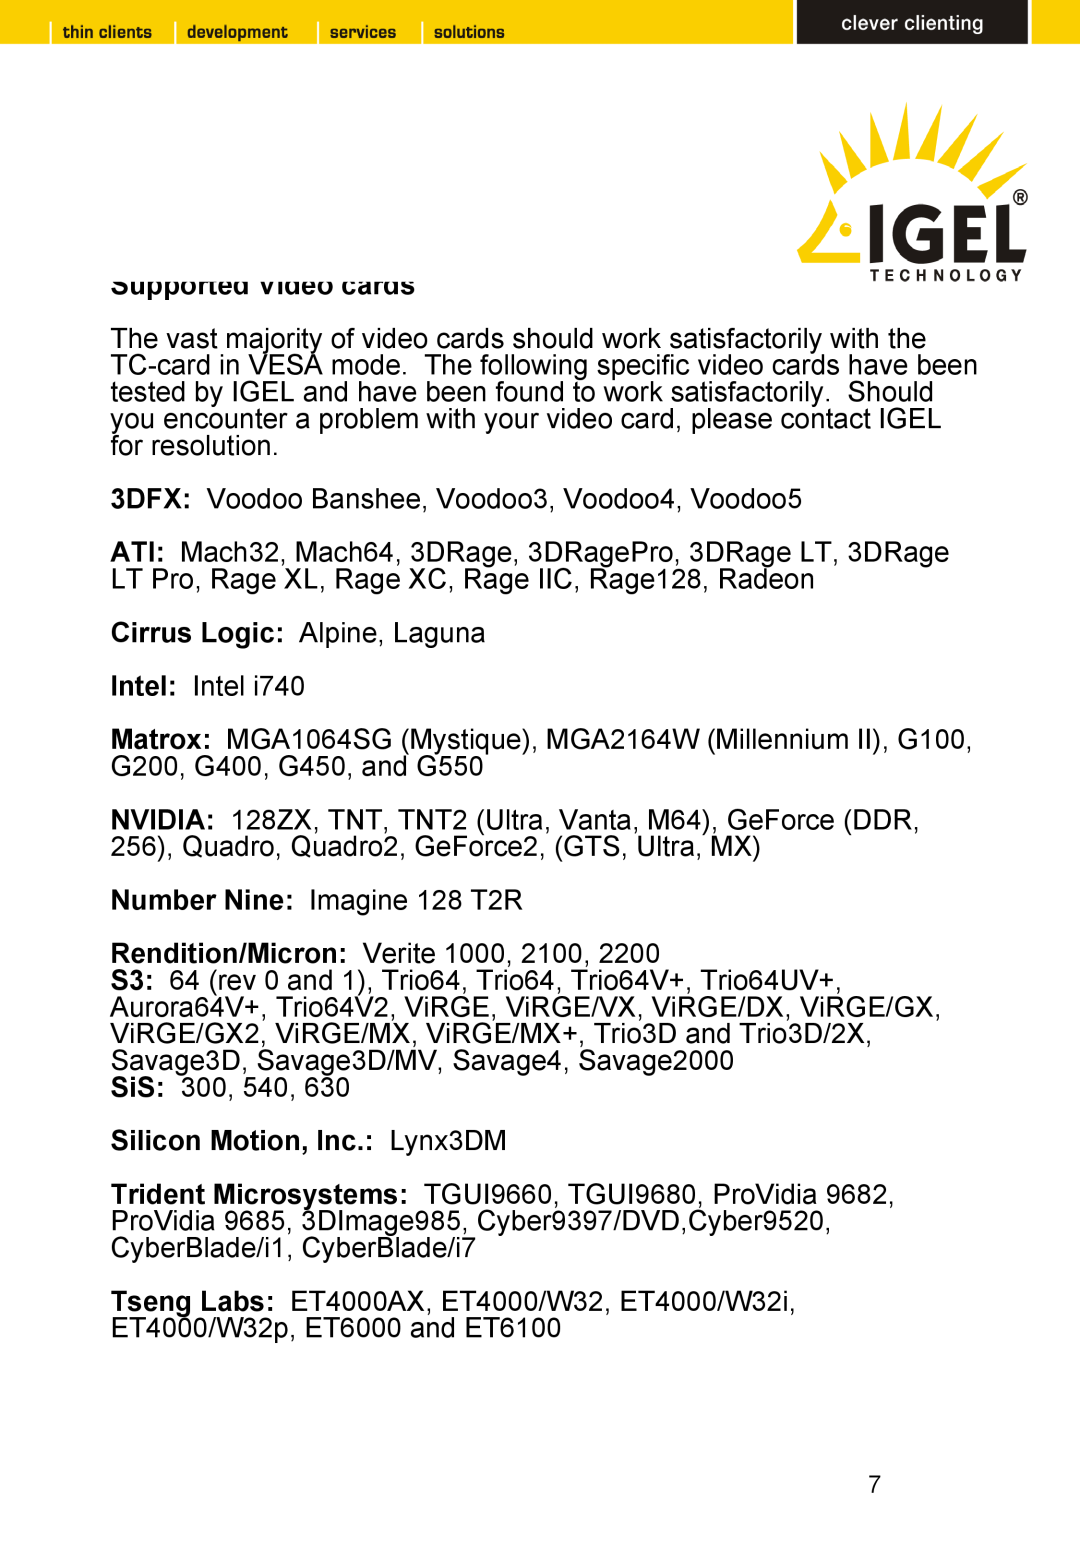 Intel TC 64 LX CF, TC 32 LX CF manual Supported Video cards, Cirrus Logic Alpine, Laguna, Silicon Motion, Inc. Lynx3DM 